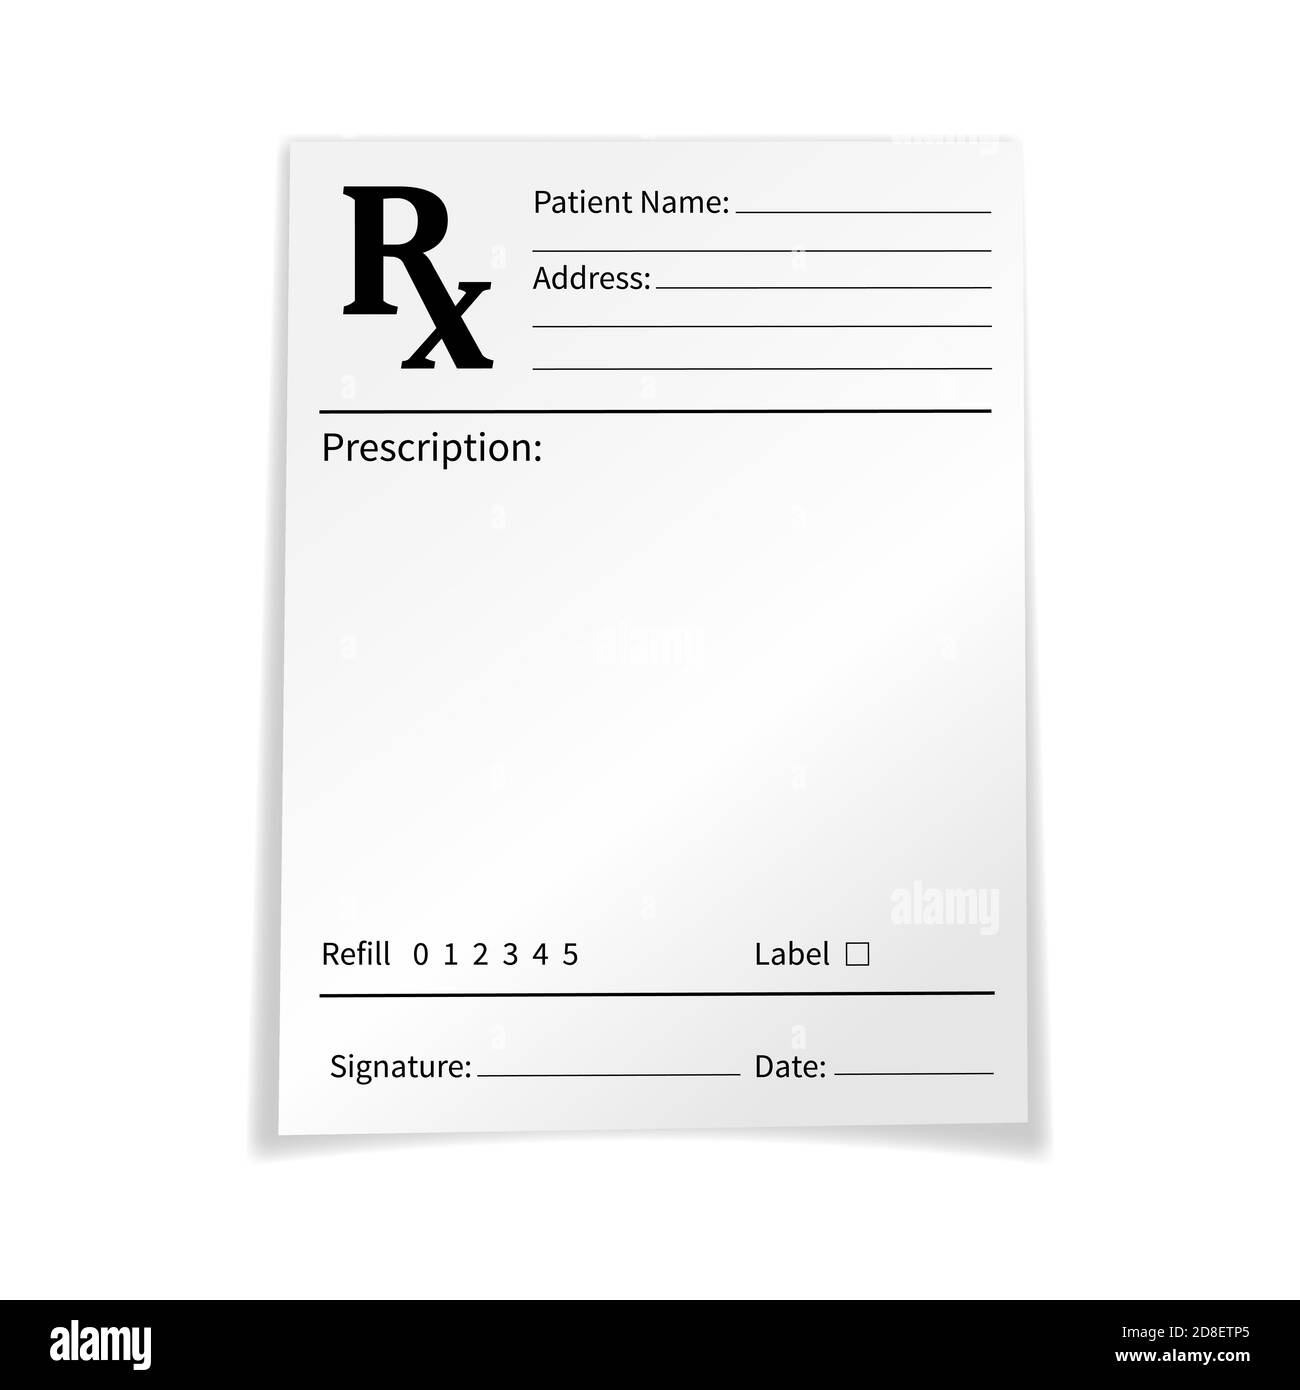 Medical prescription form Banque d'images vectorielles - Alamy